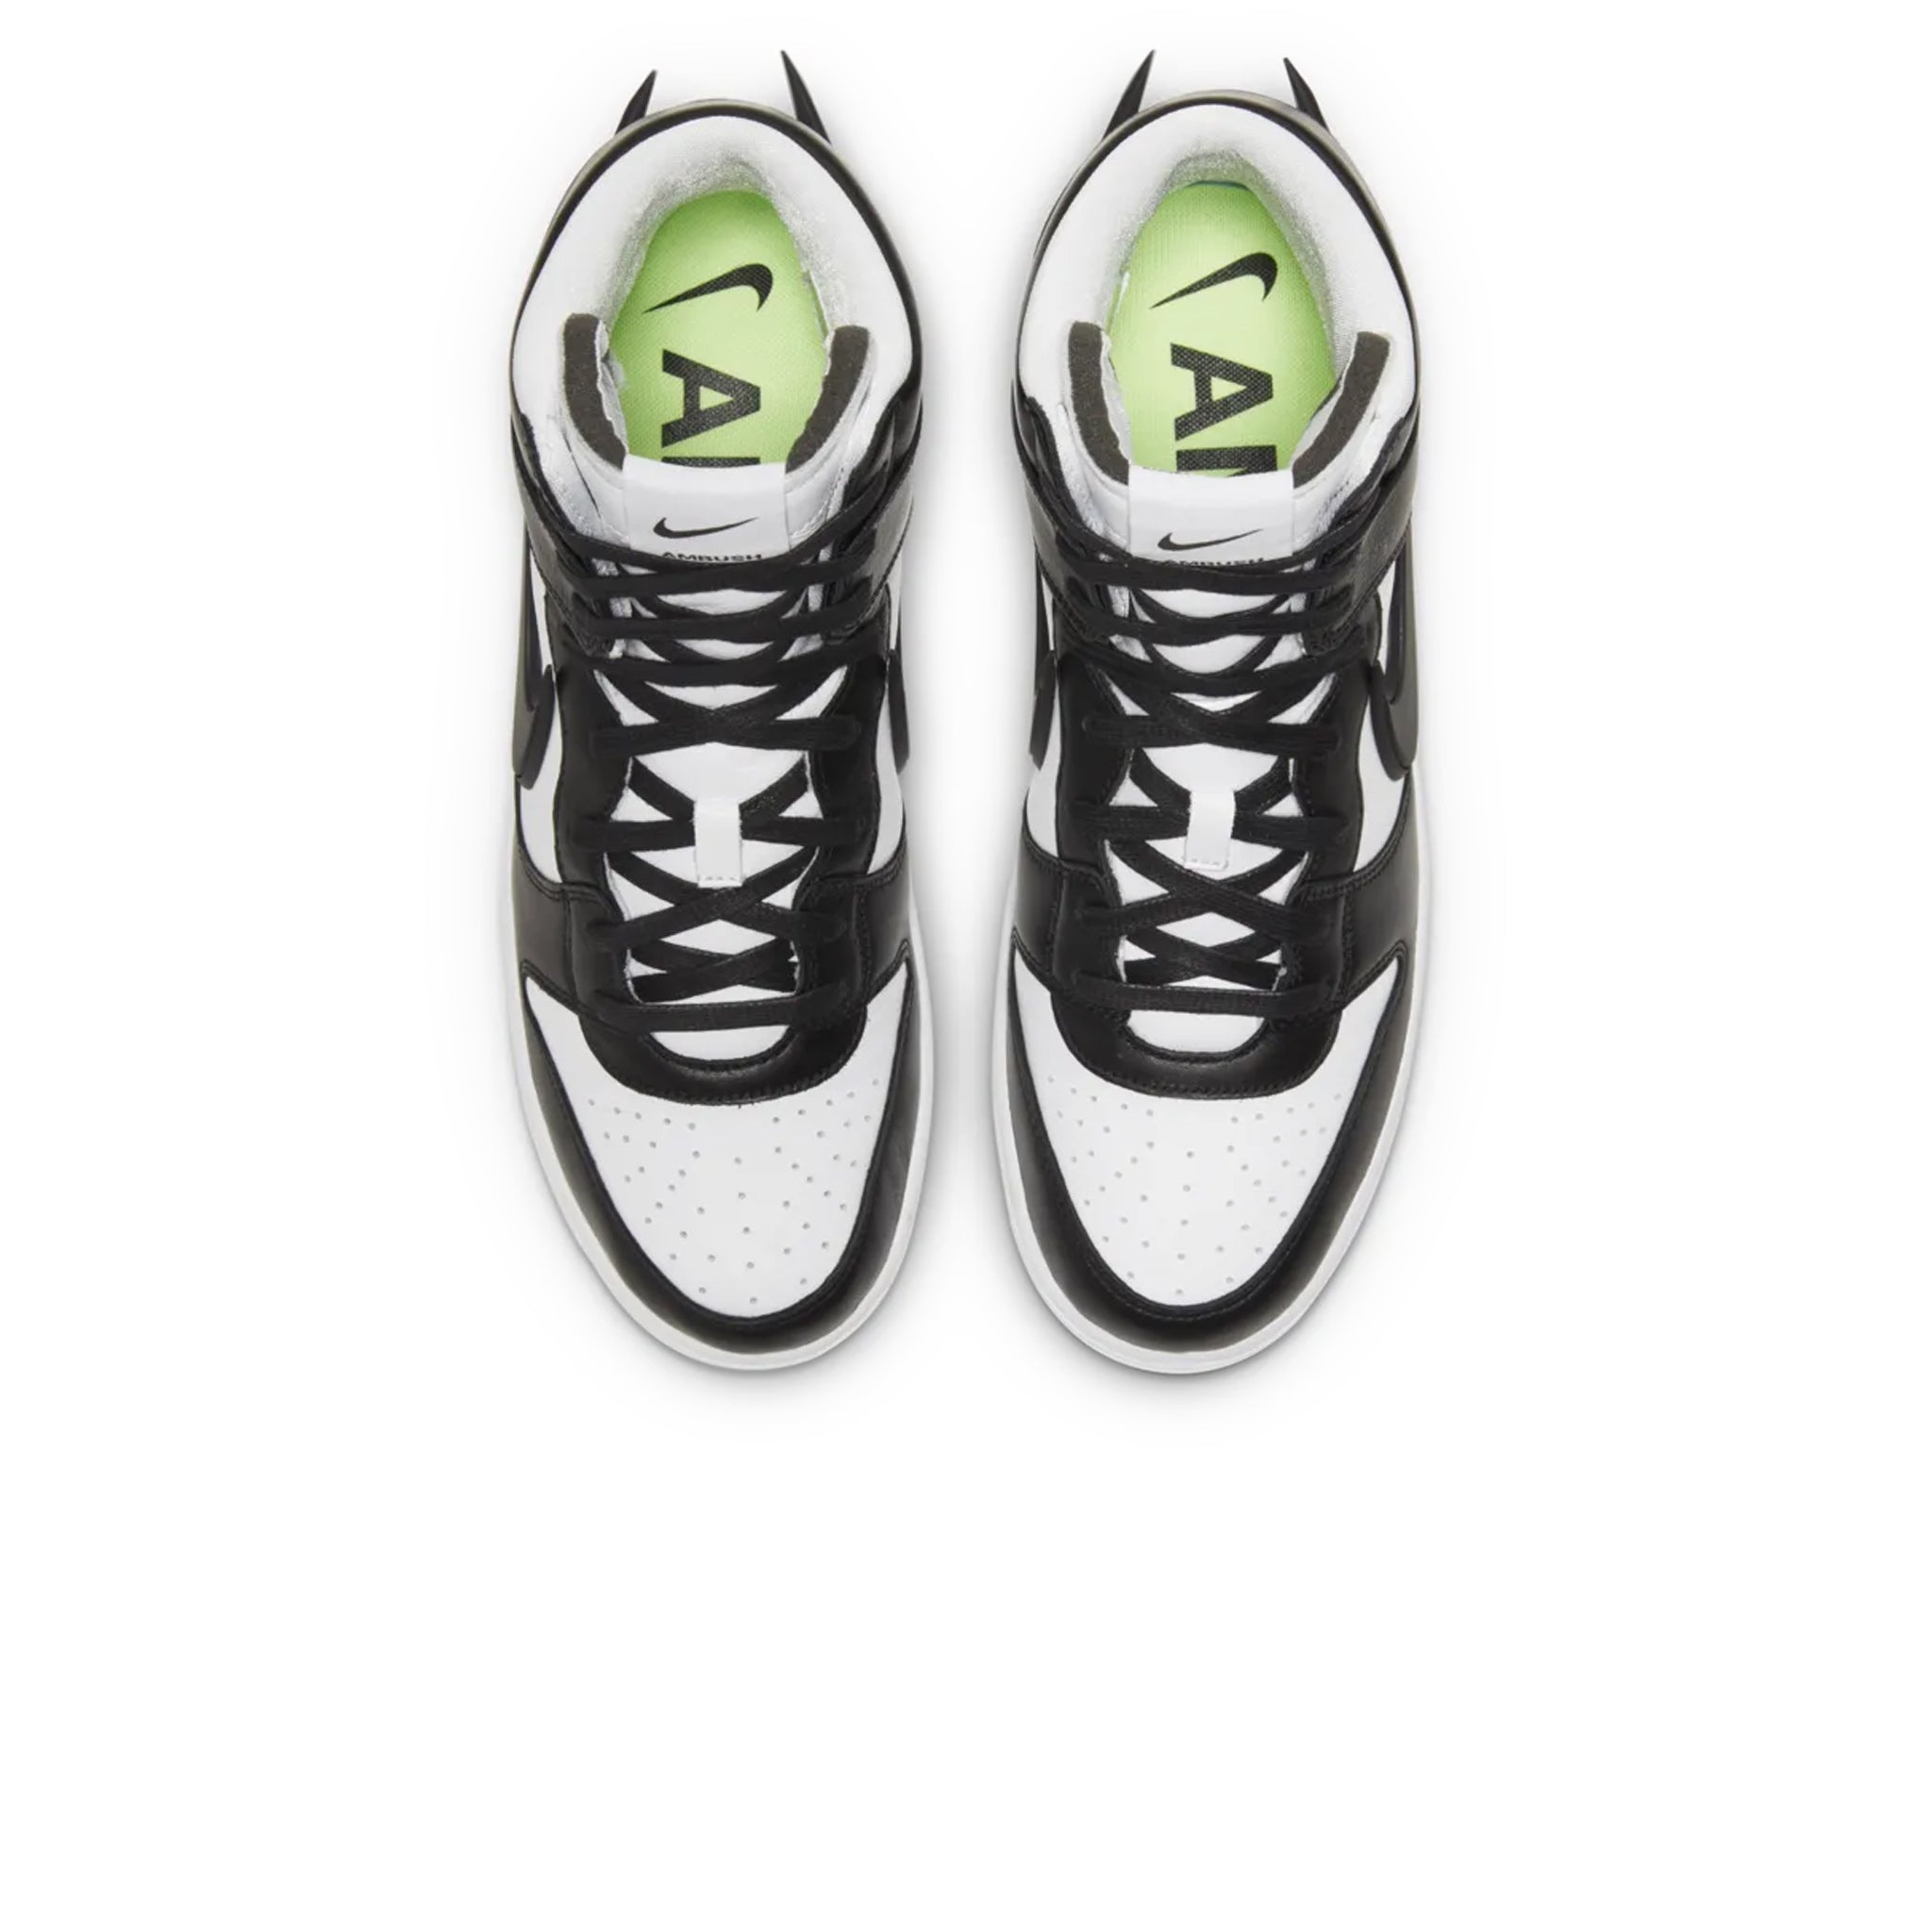 Top down view of Nike Dunk High Ambush Black White Sneaker CU7544-001